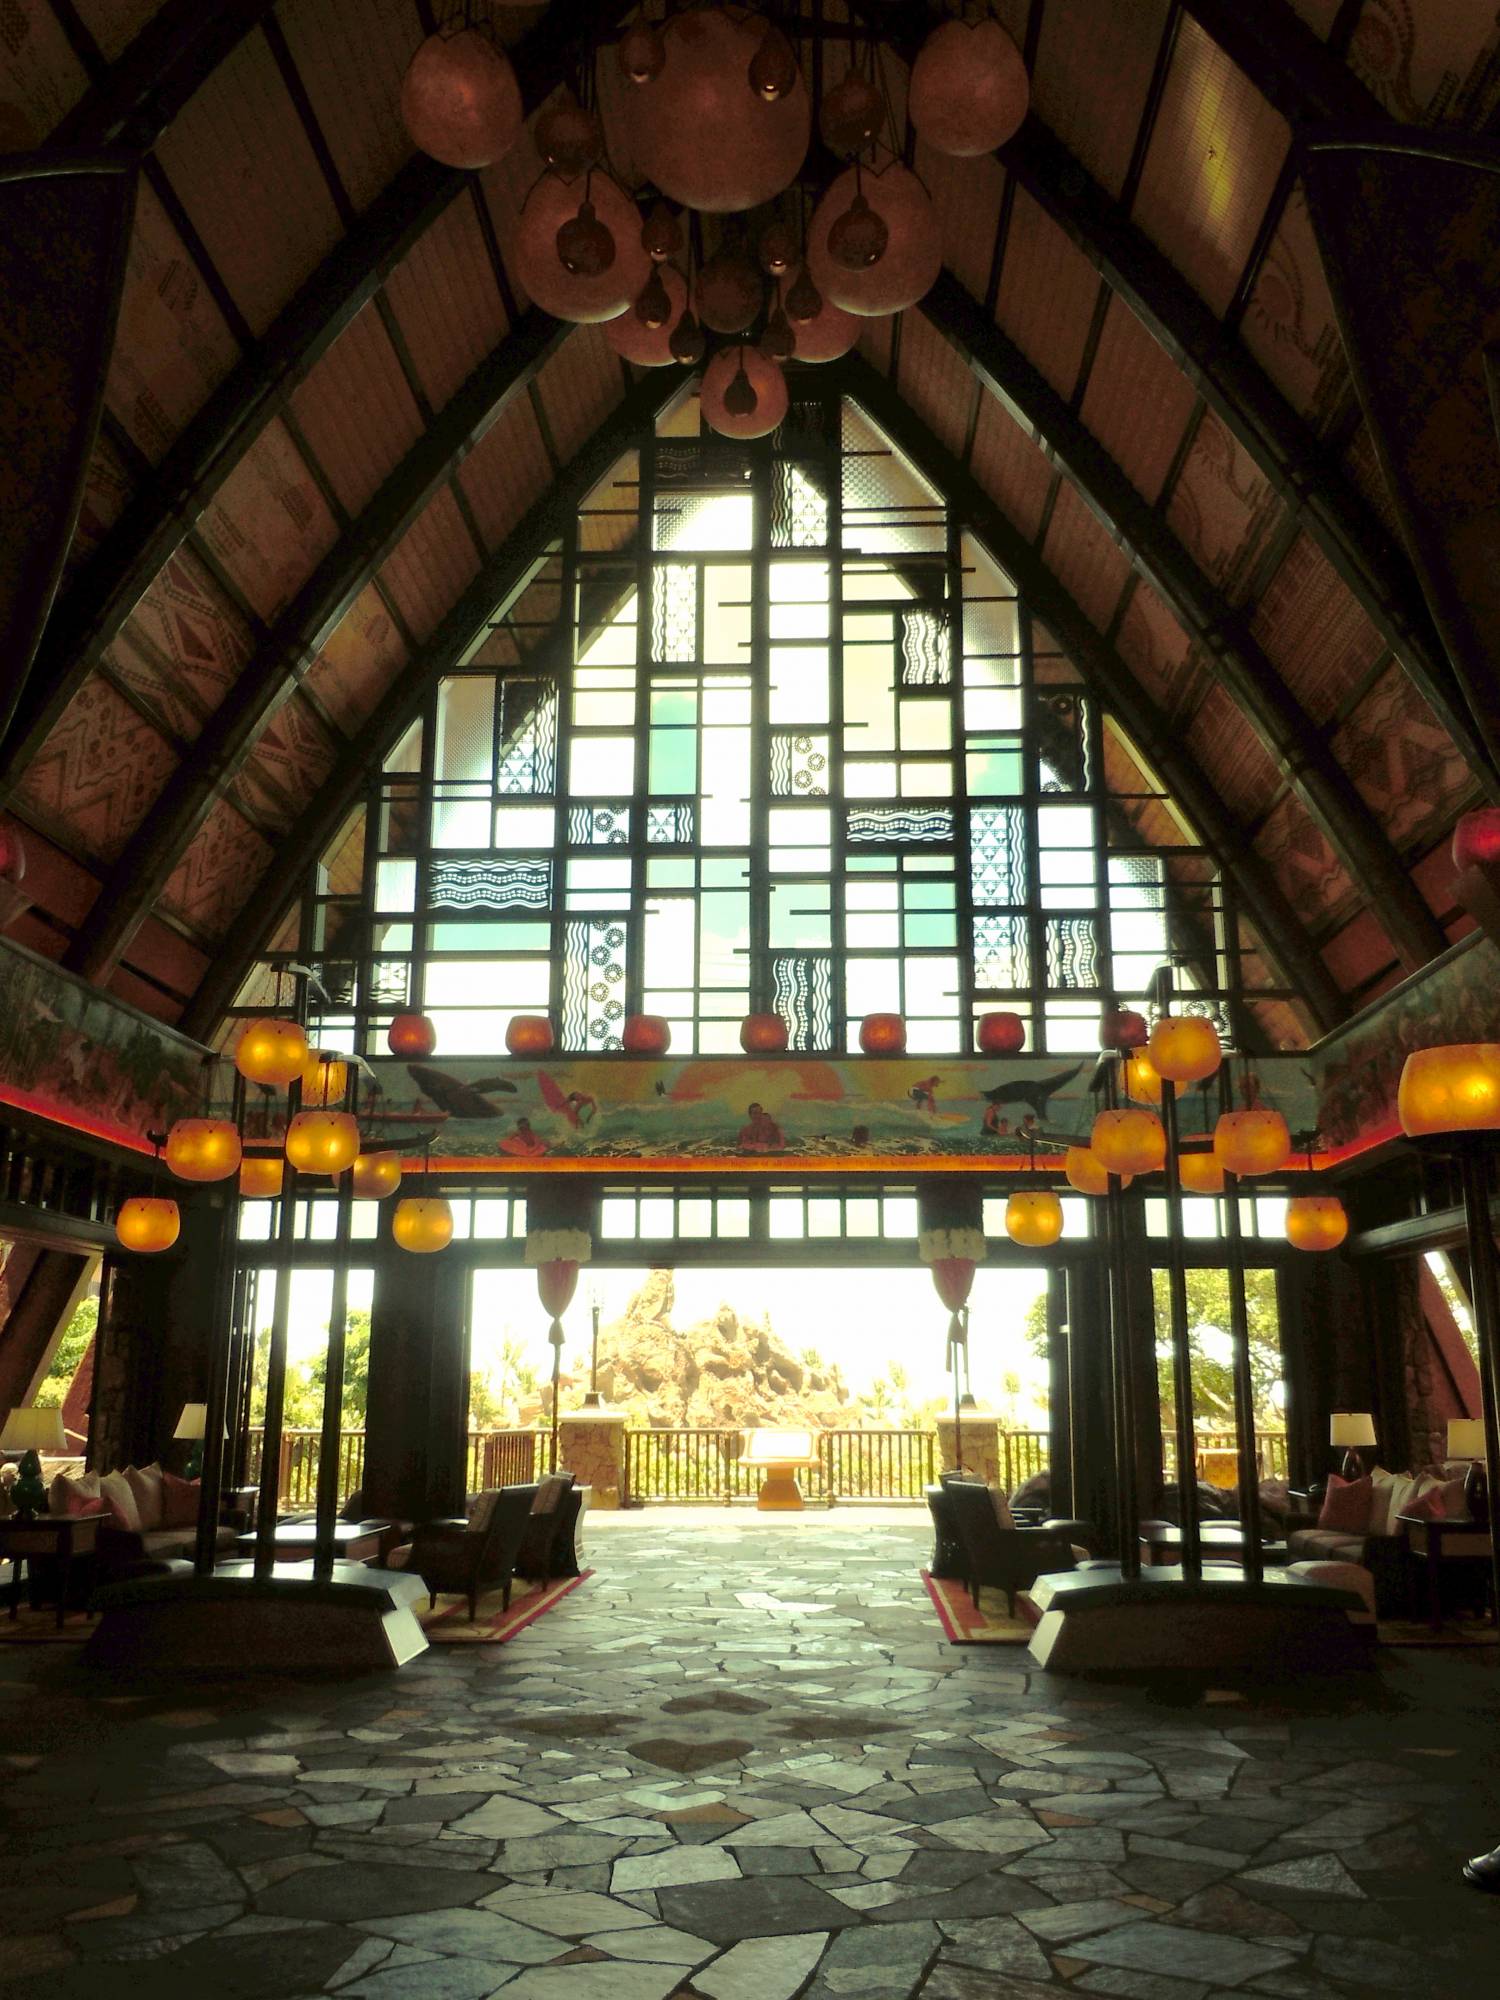 Discover the magic of Disney's newest resort, Aulani | PassPorter.com